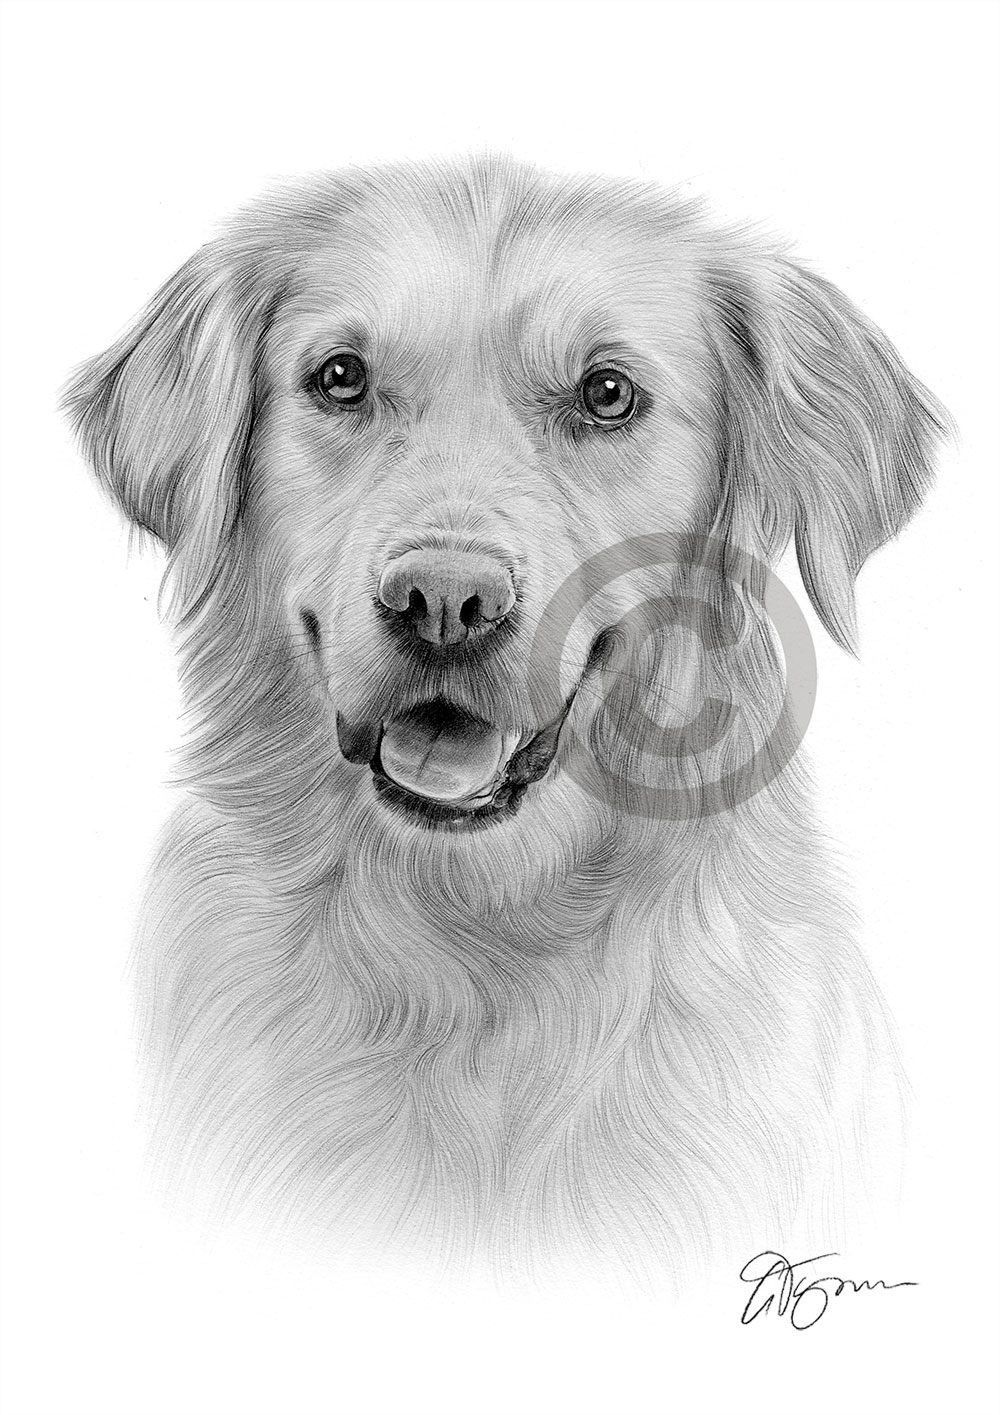 GOLDEN RETRIEVER art pencil drawing print A3 / A4 sizes dog signed